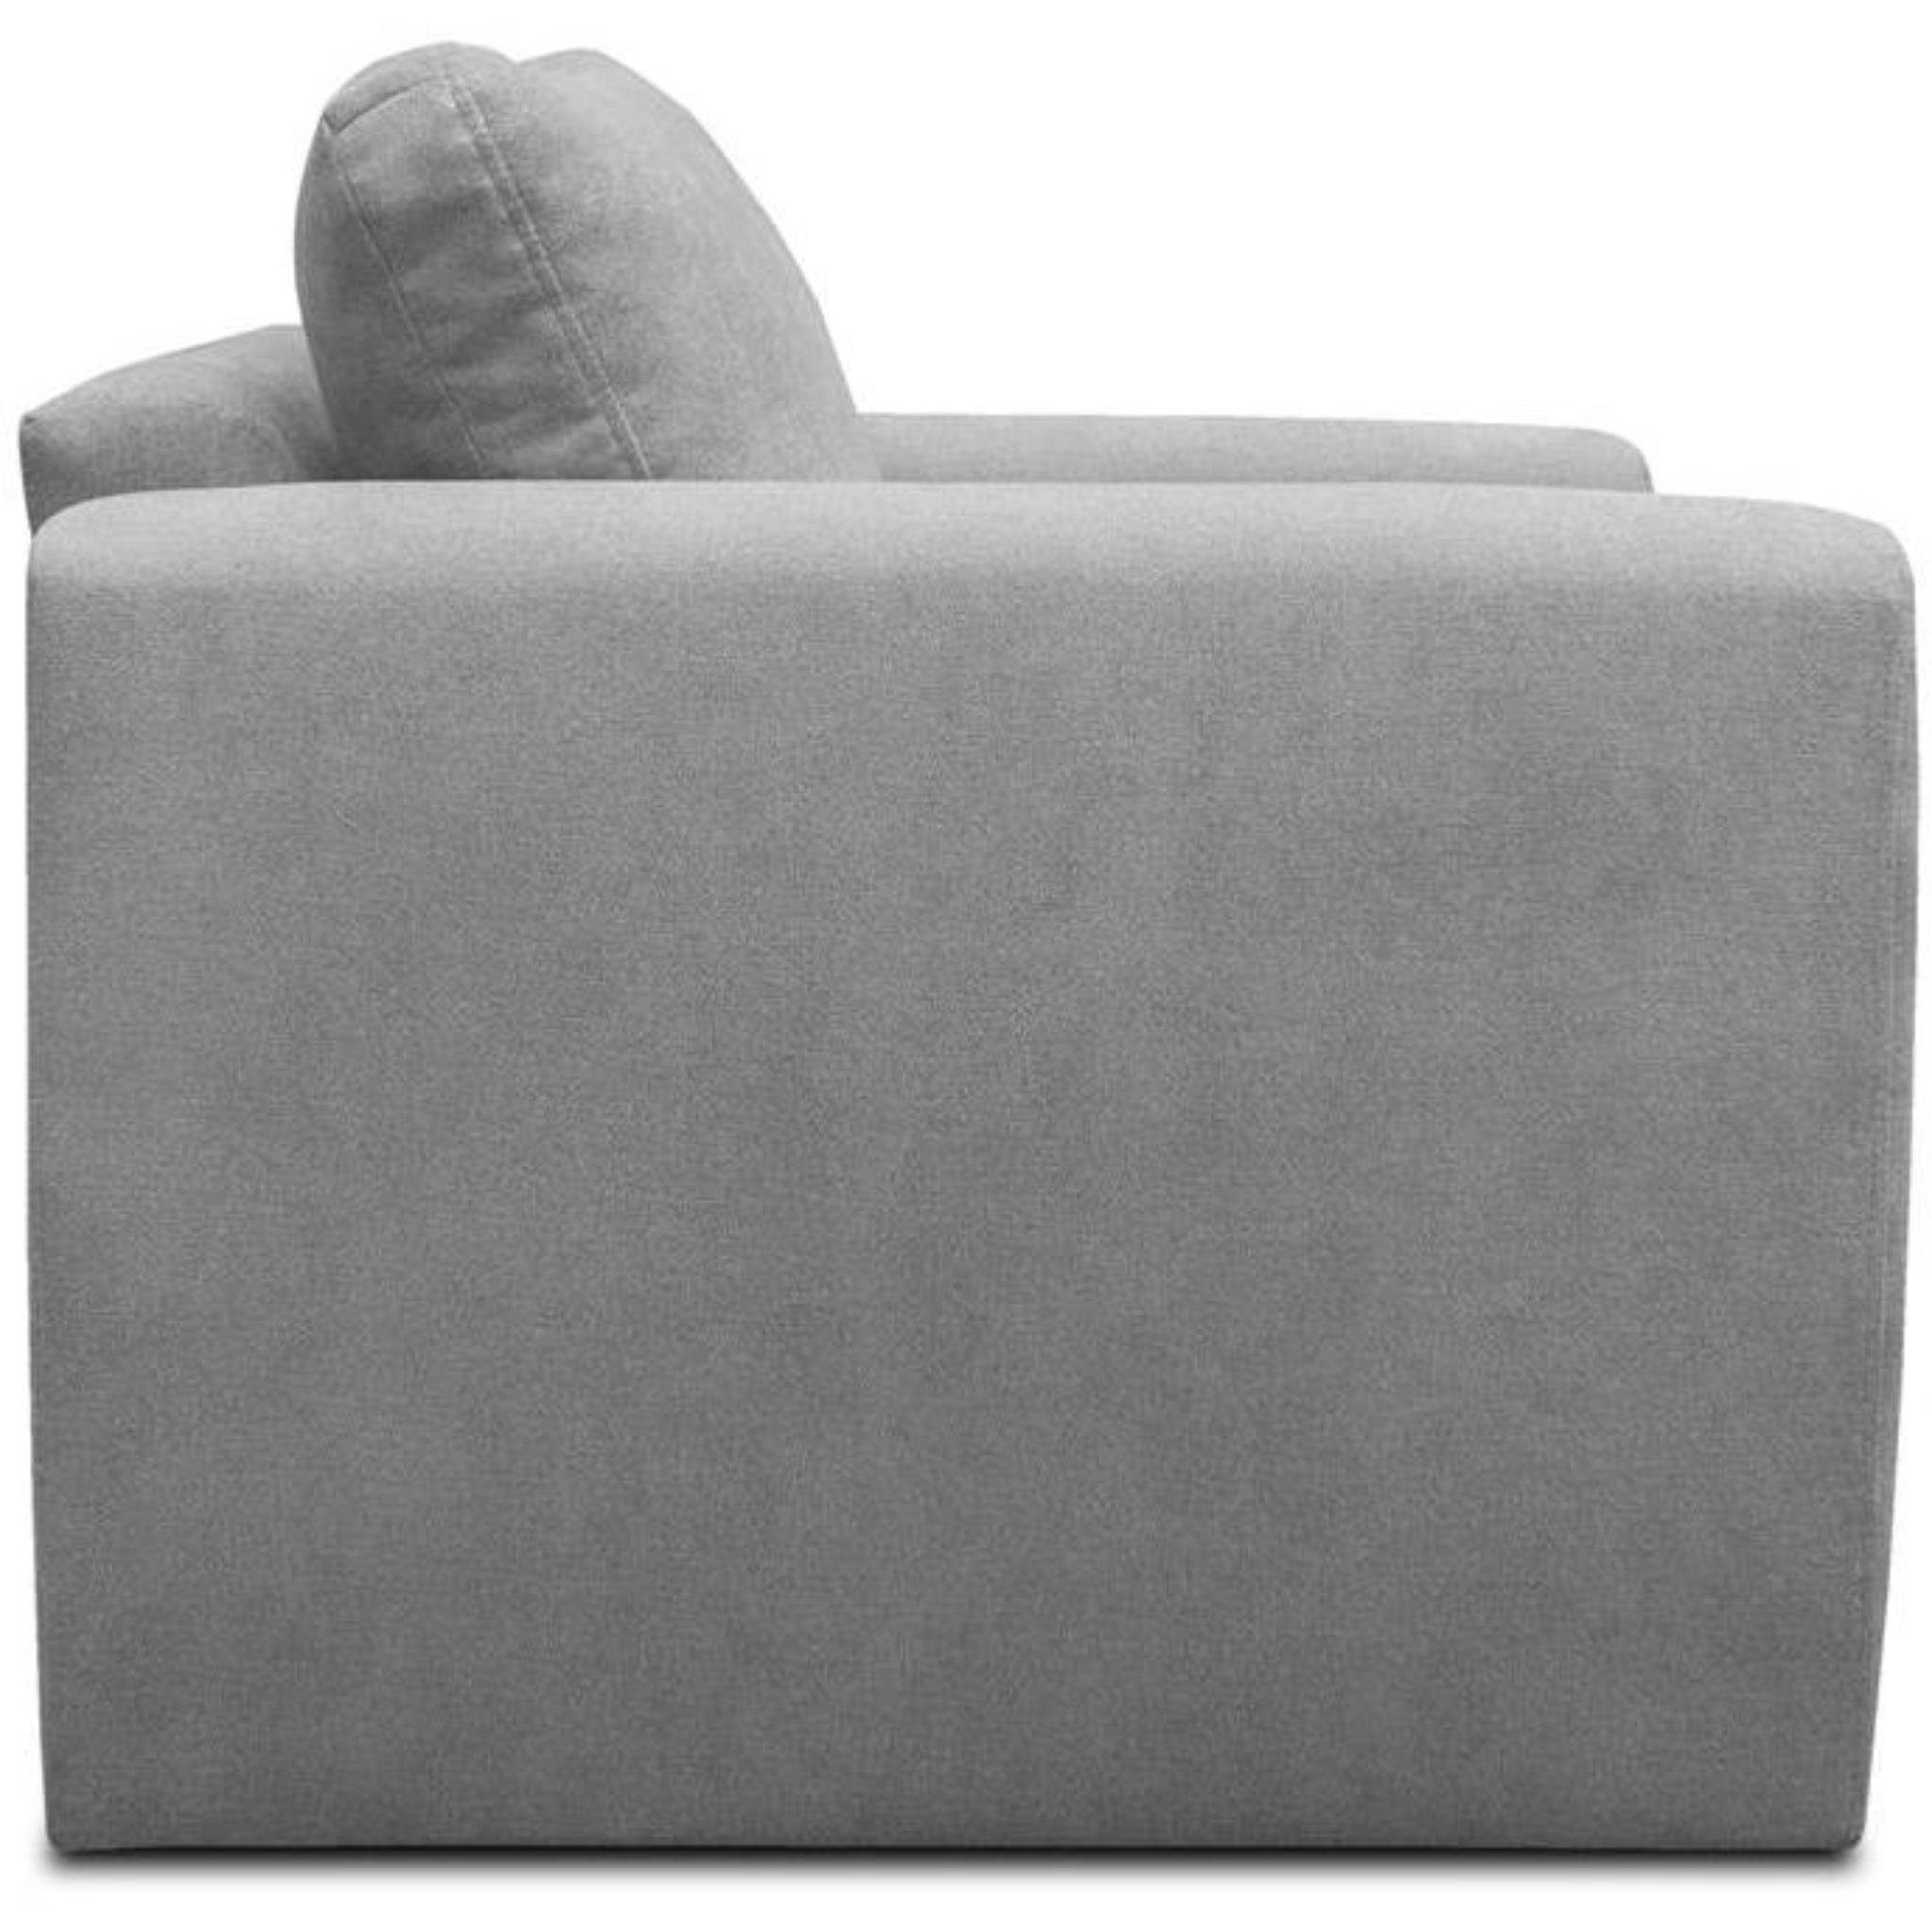 1-Sitzer Schlaffunktion, (alfa Kamel mit Grau (Modern Polstersessel Relaxsessel Beautysofa Bettkasten, Sofa, 50) Wohnzimmersessel),